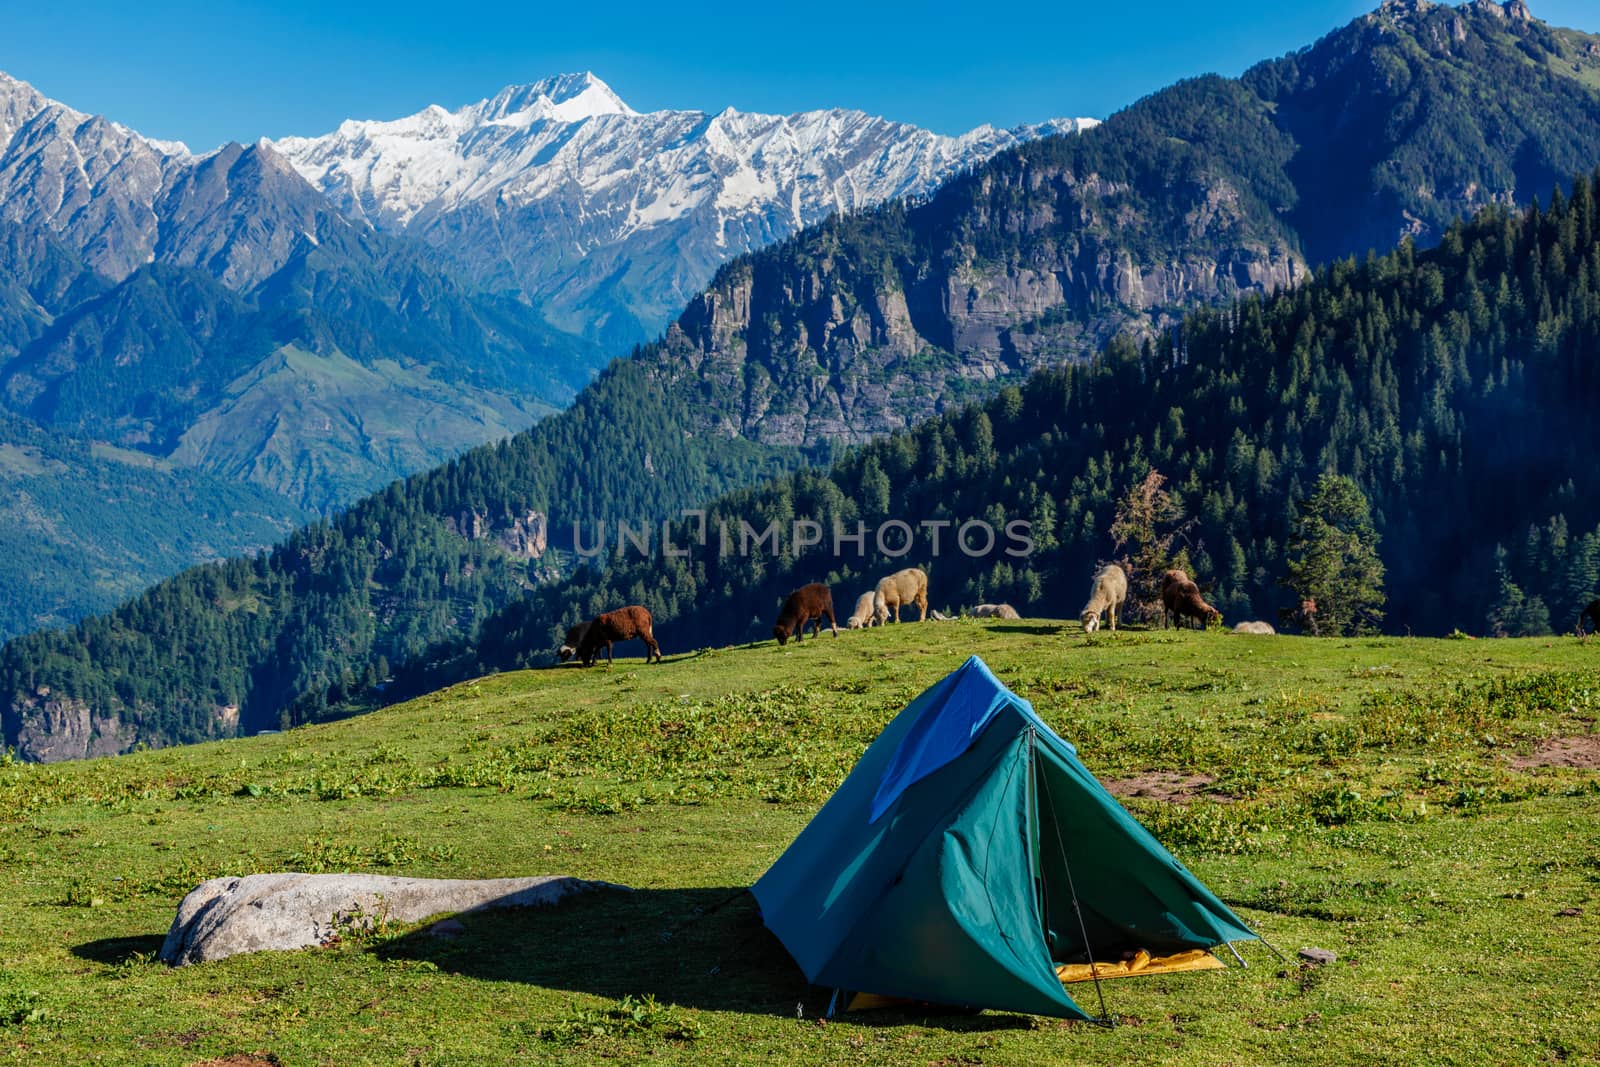 Tent in Himalayas mountains with flock of sheep grazing. Kullu Valley, Himachal Pradesh, India